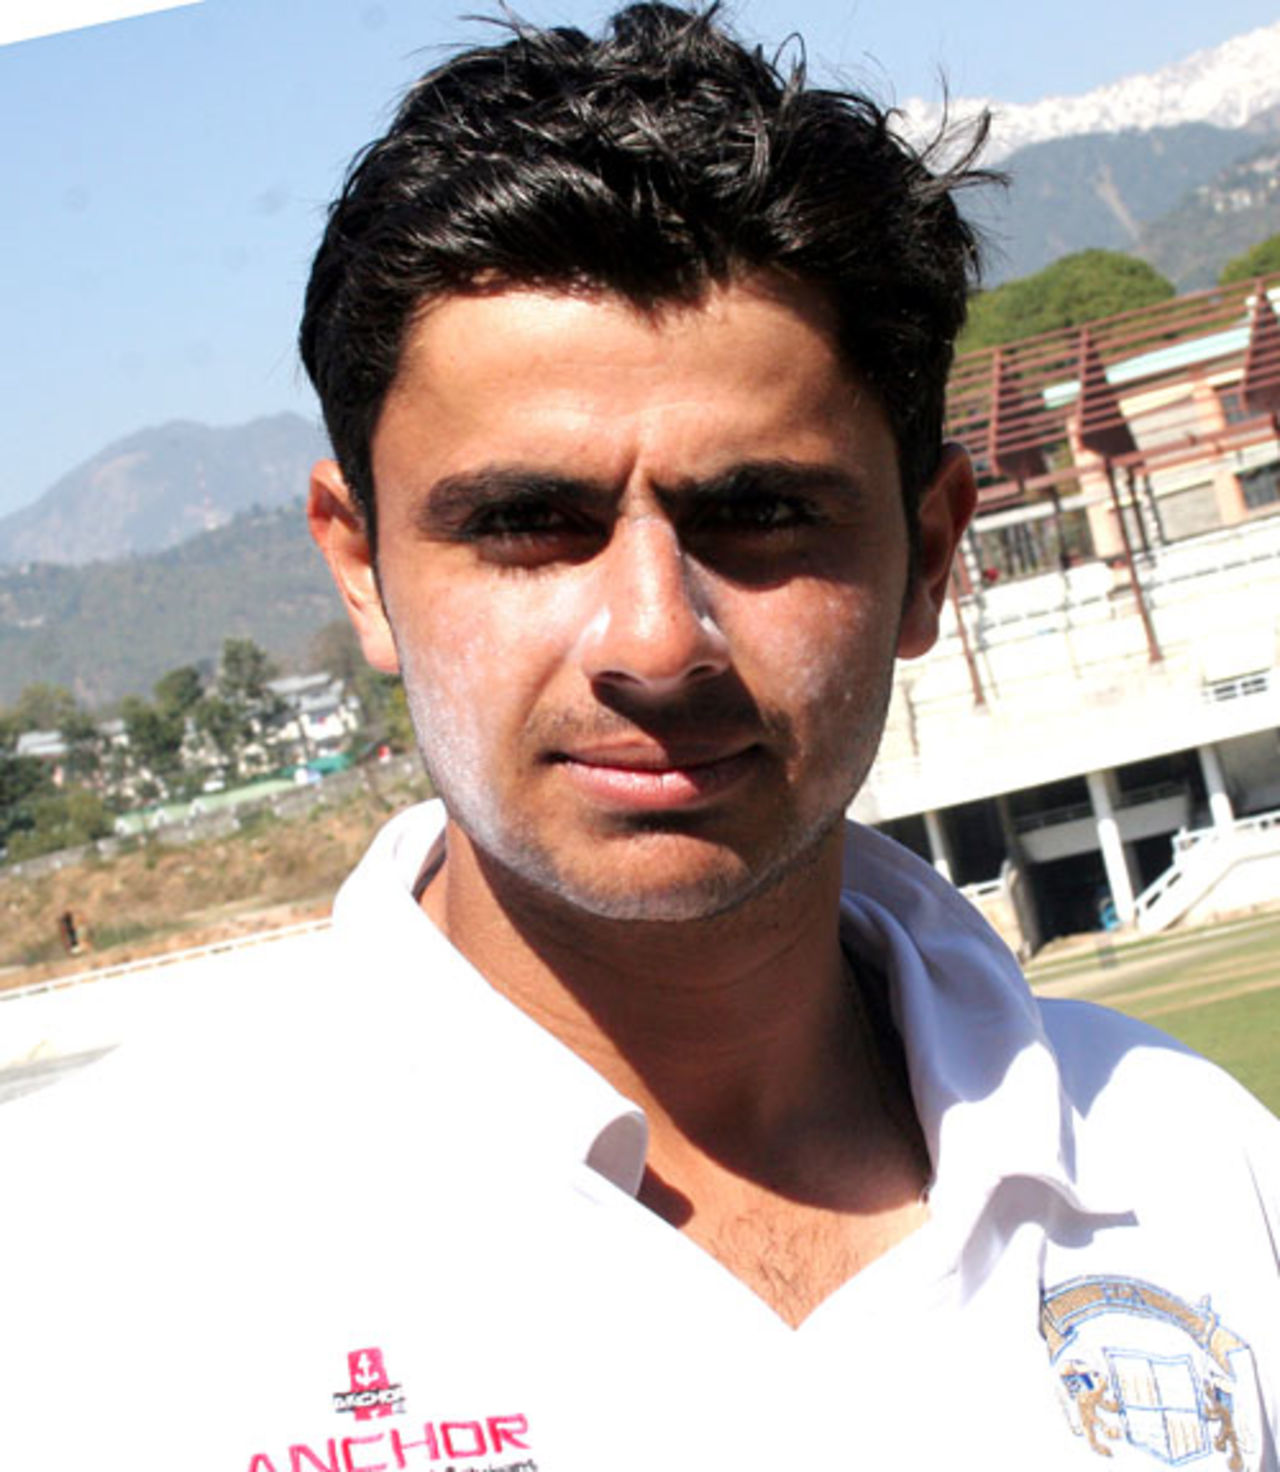 Taruwar Kohli, player portrait, February 19, 2009